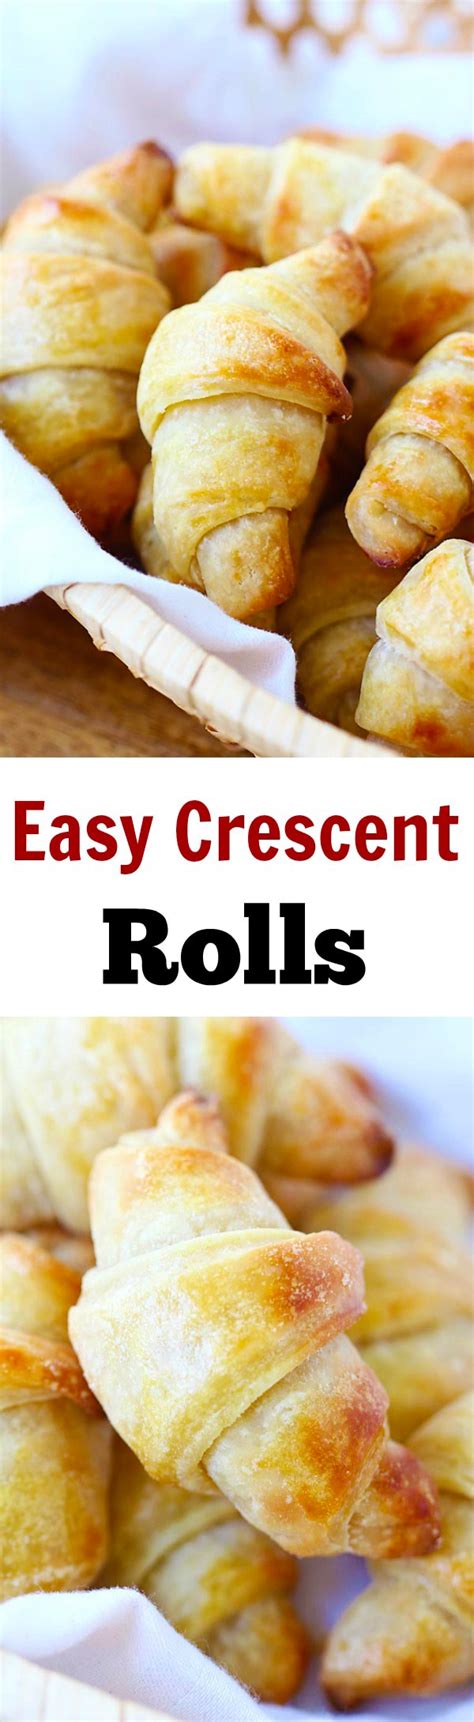 easy crescent rolls easy delicious recipes